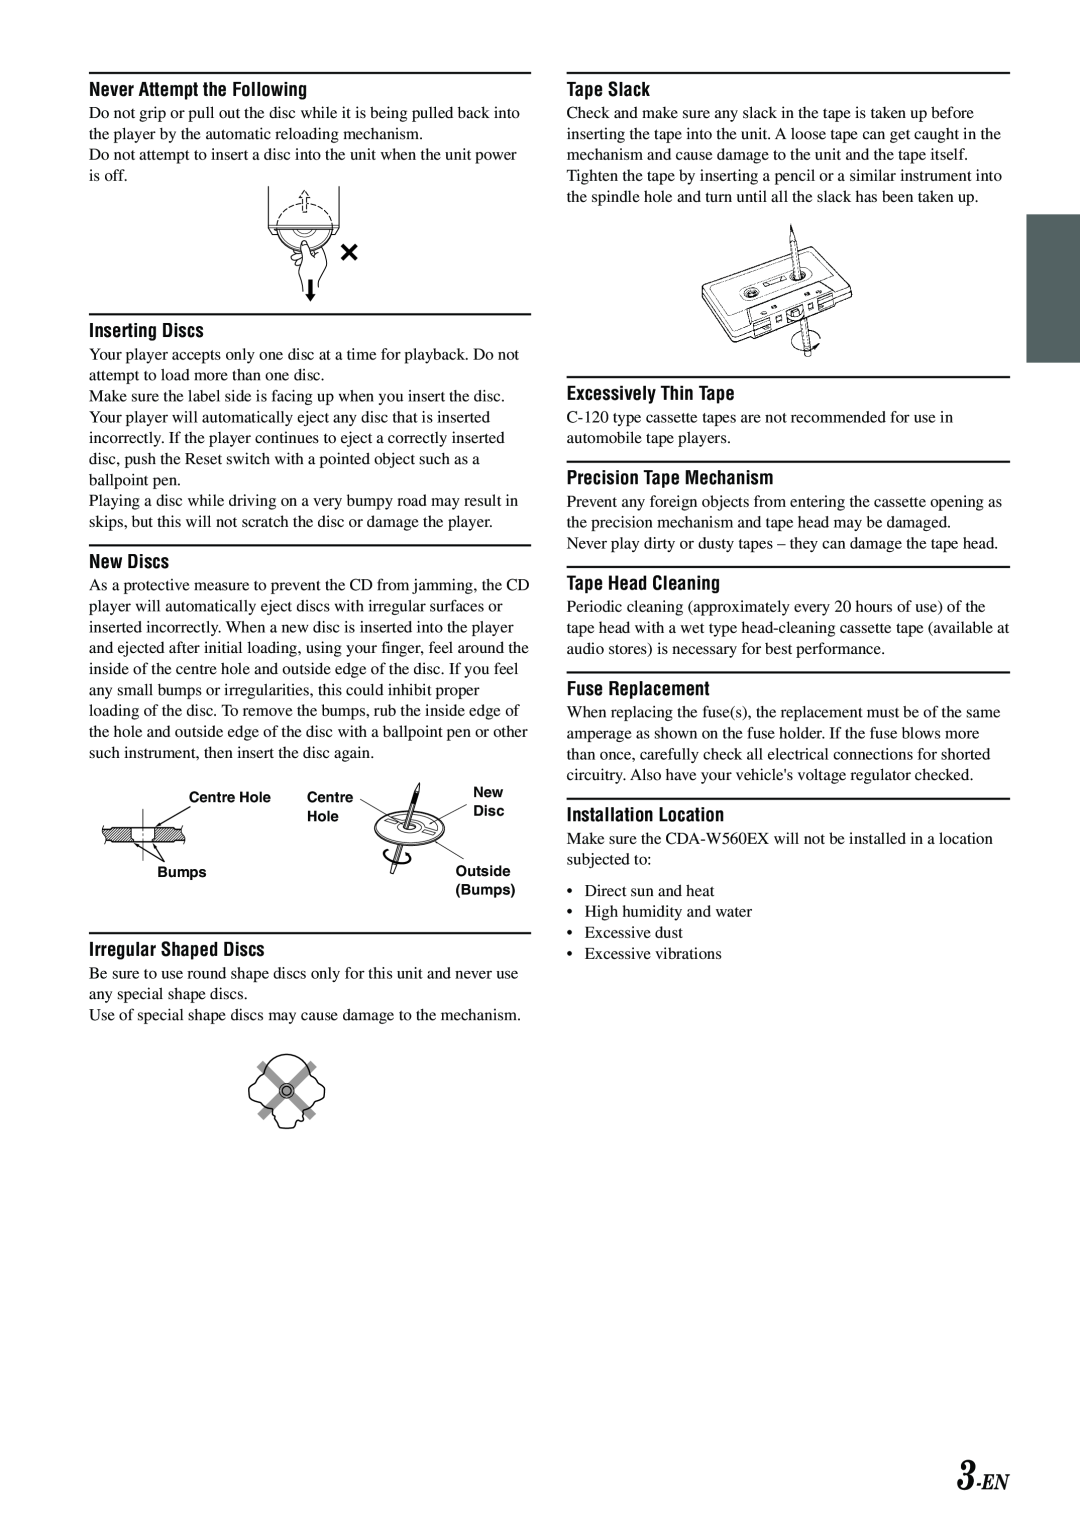 Alpine CDA-W560EG owner manual 3-EN 